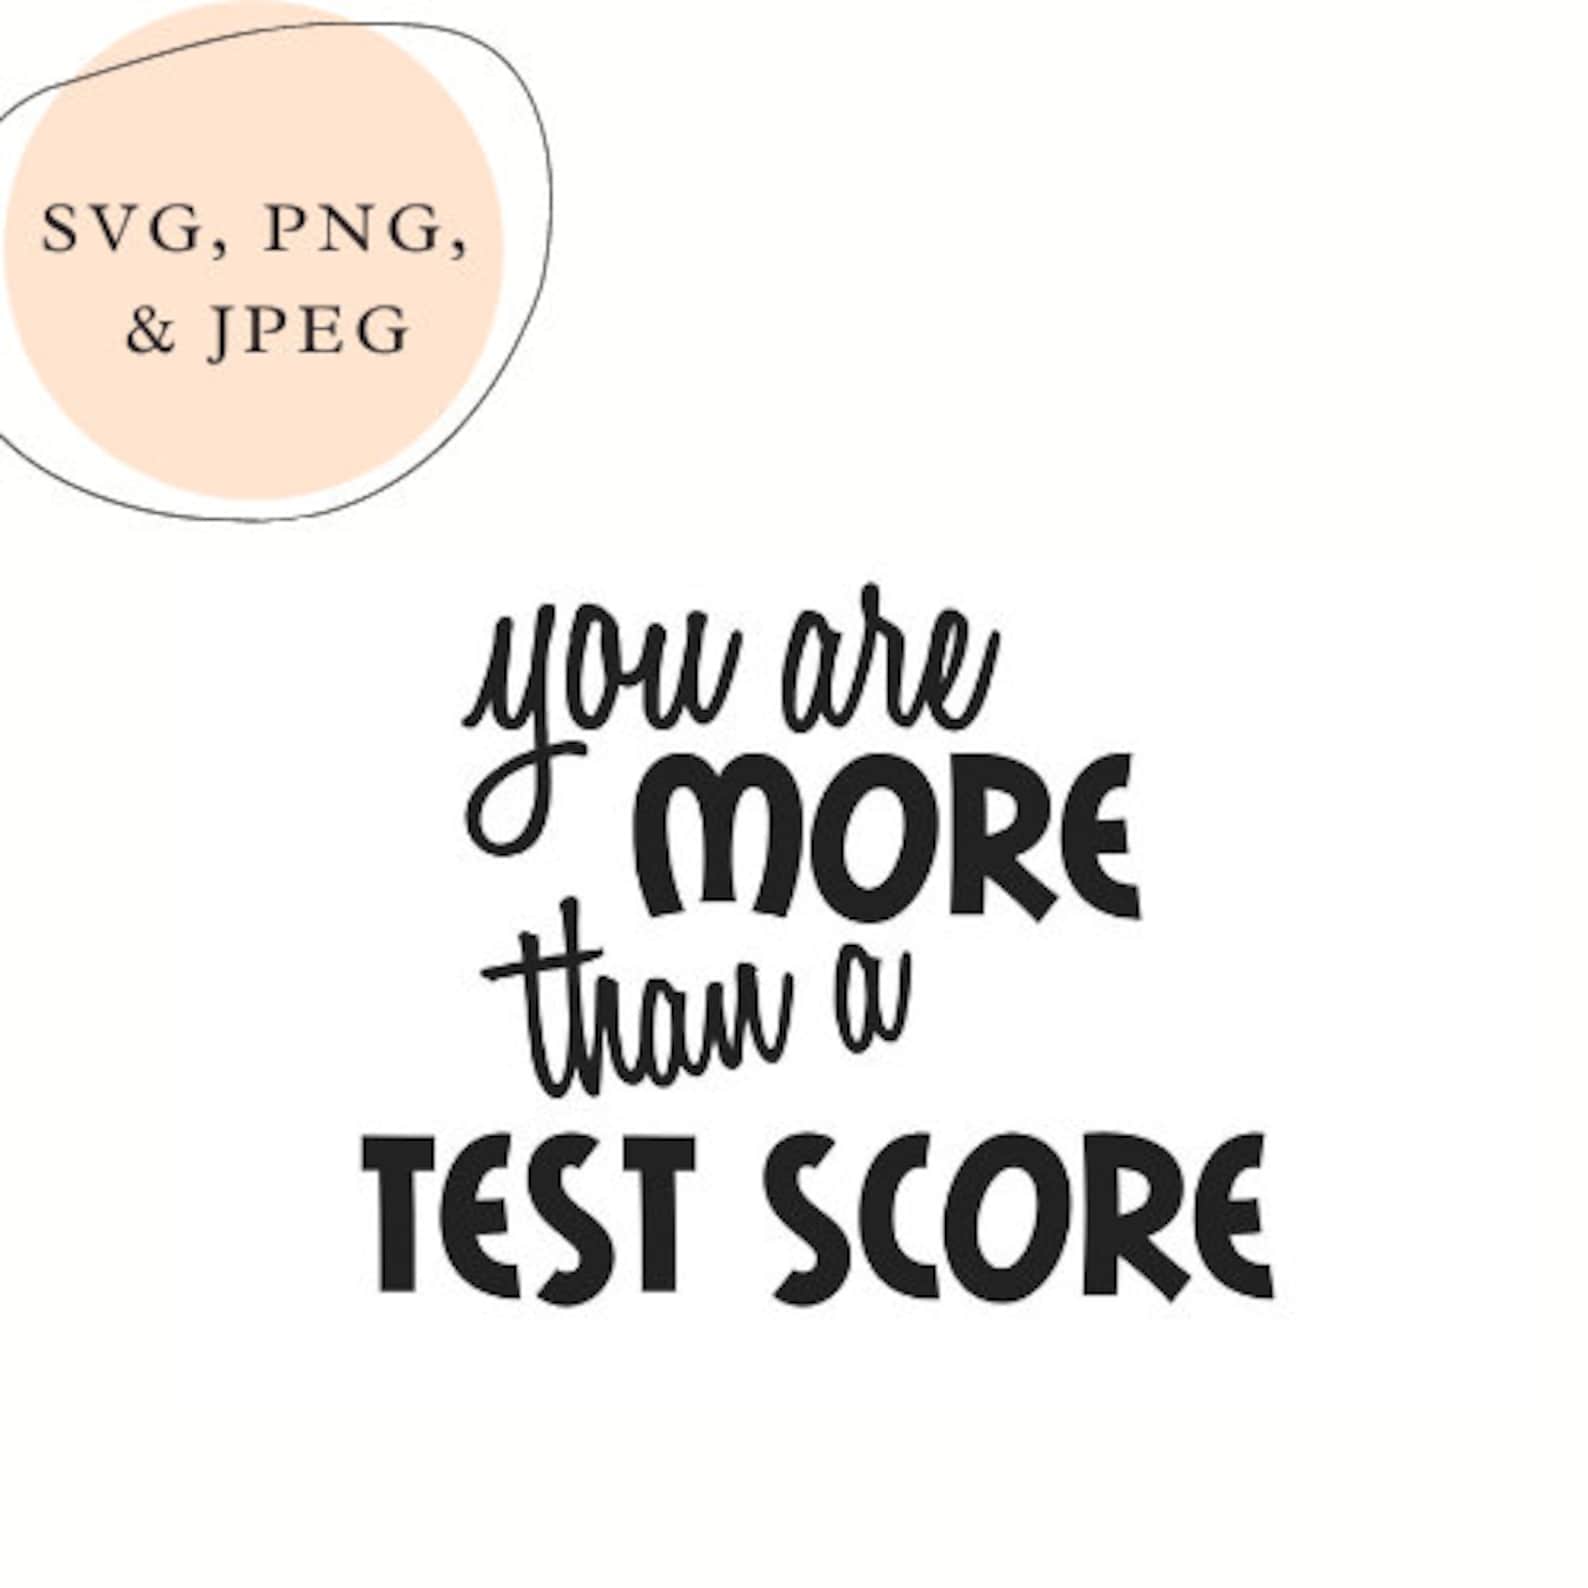 Staar Test Designs Instant Download Cut Files SVG PNG JPEG - Etsy